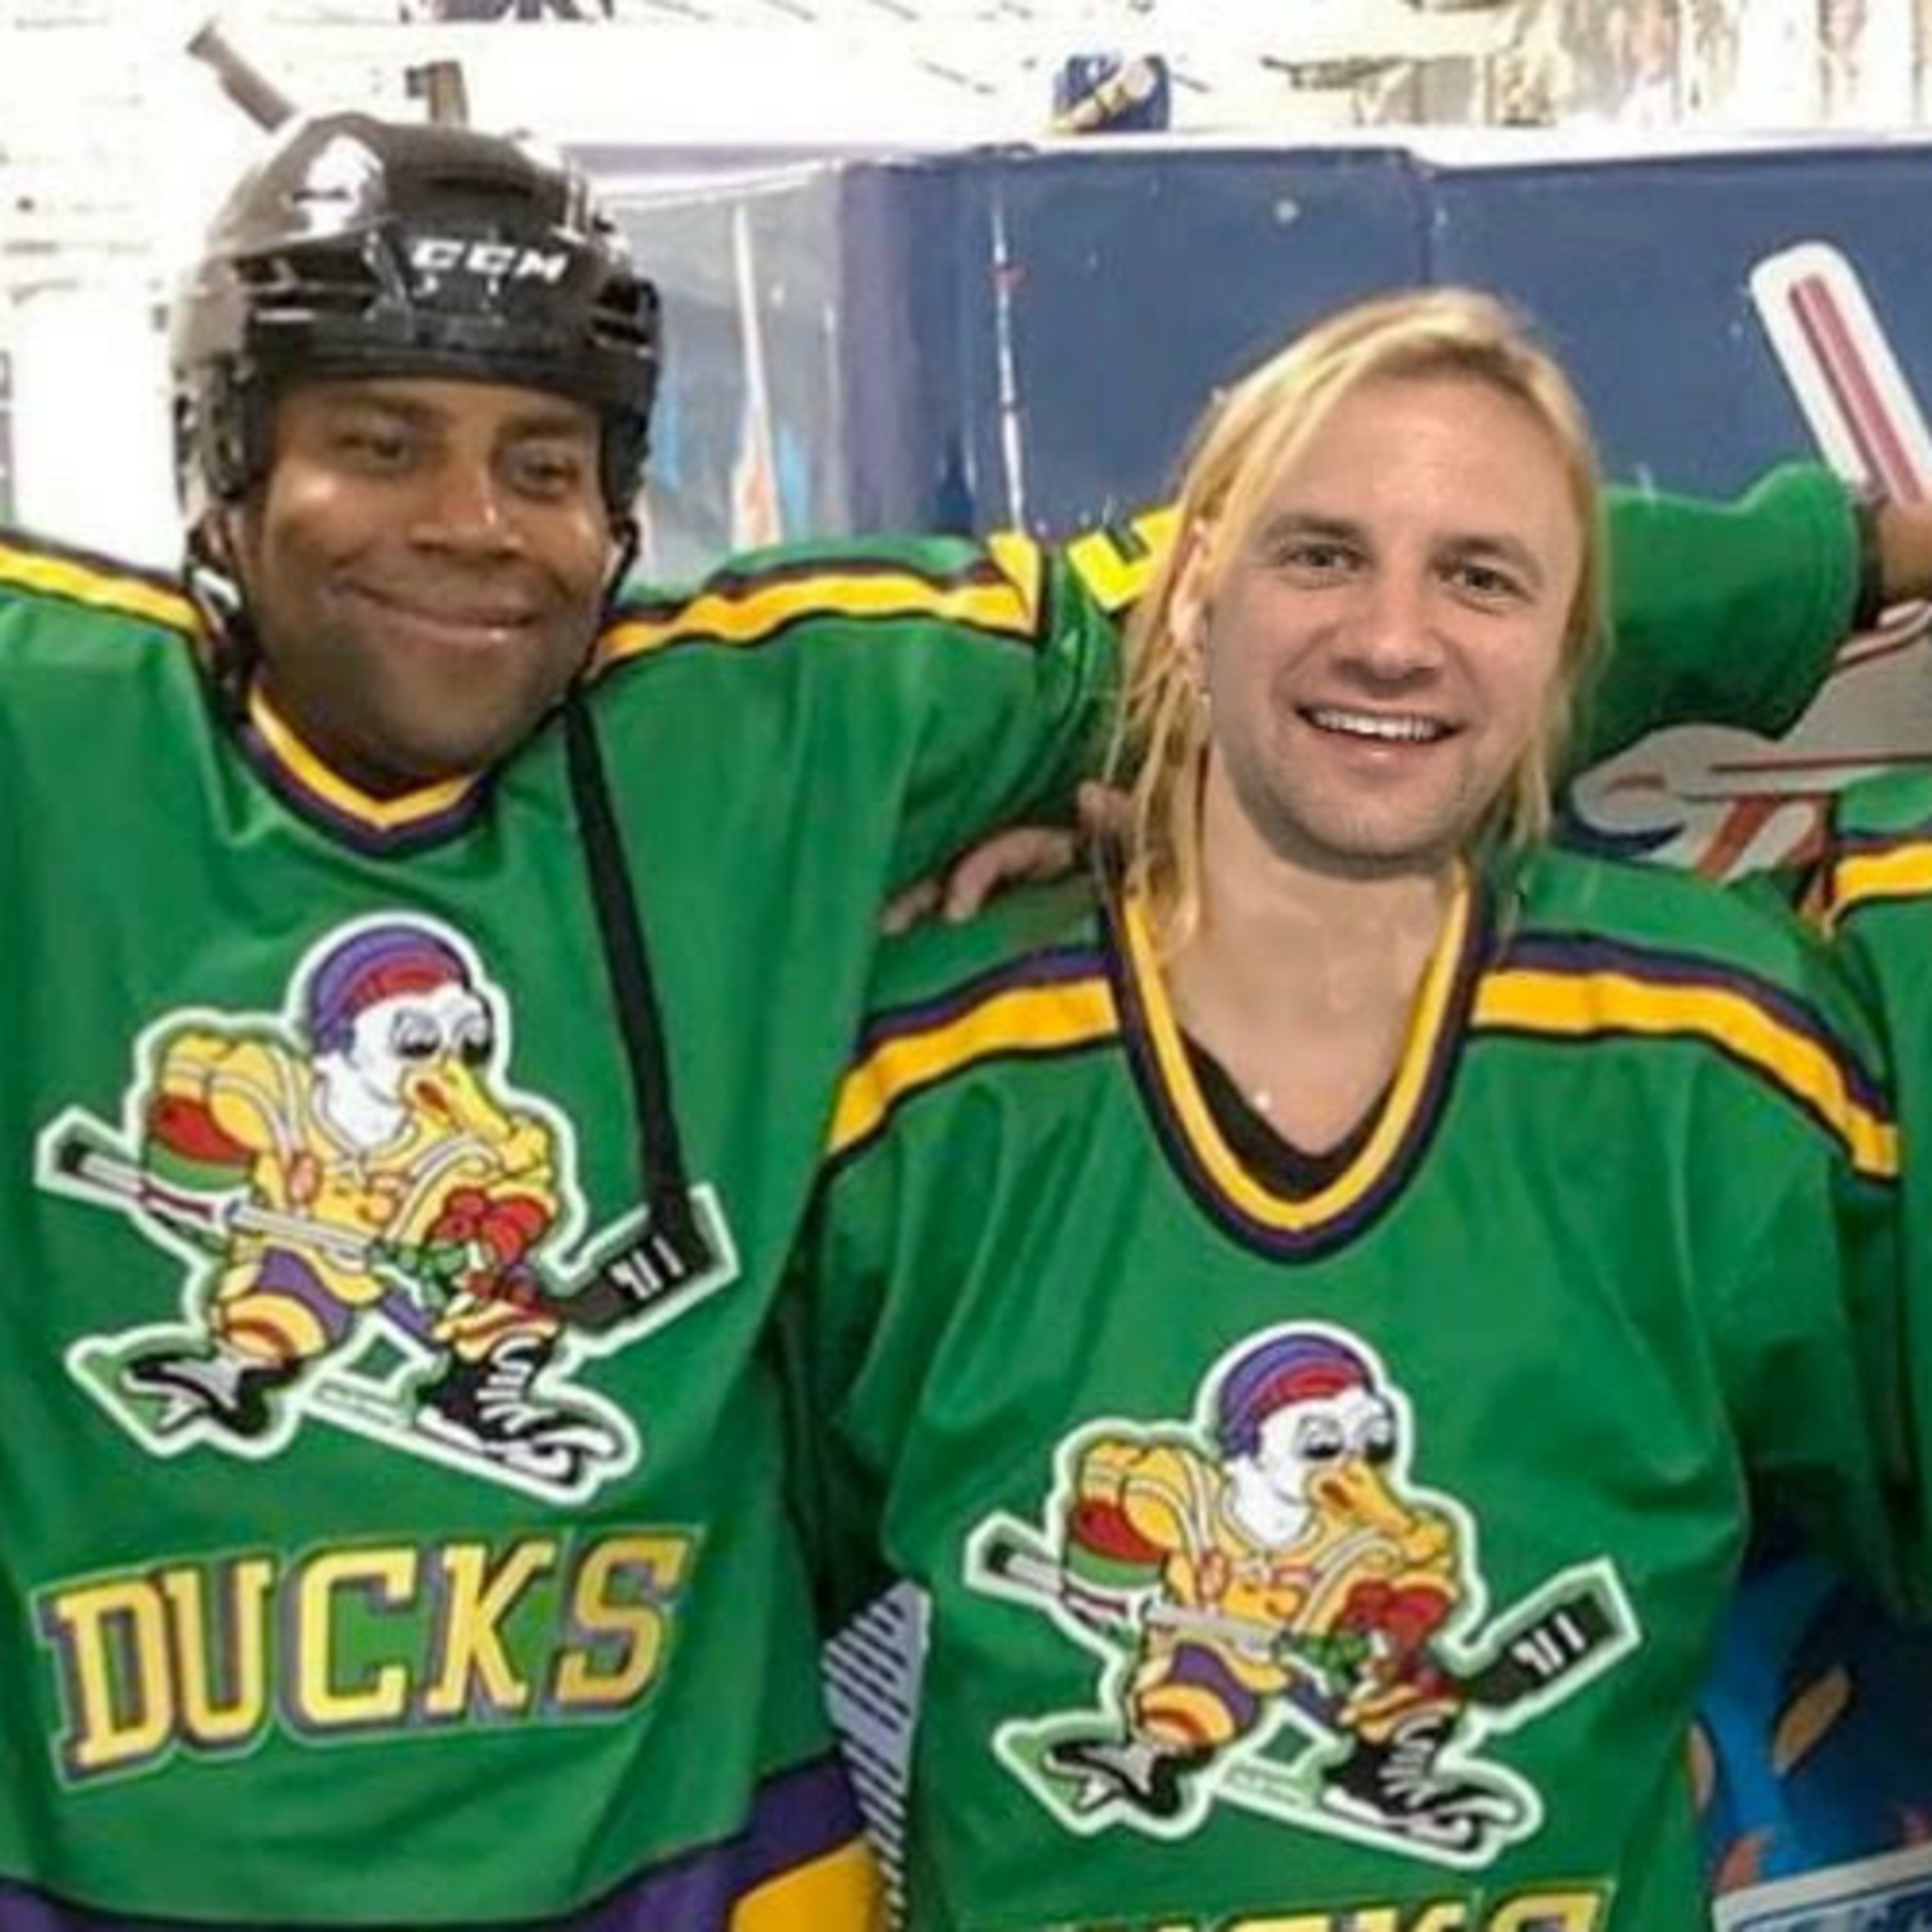 It looks like Disney is FINALLY bringing The Mighty Ducks jersey